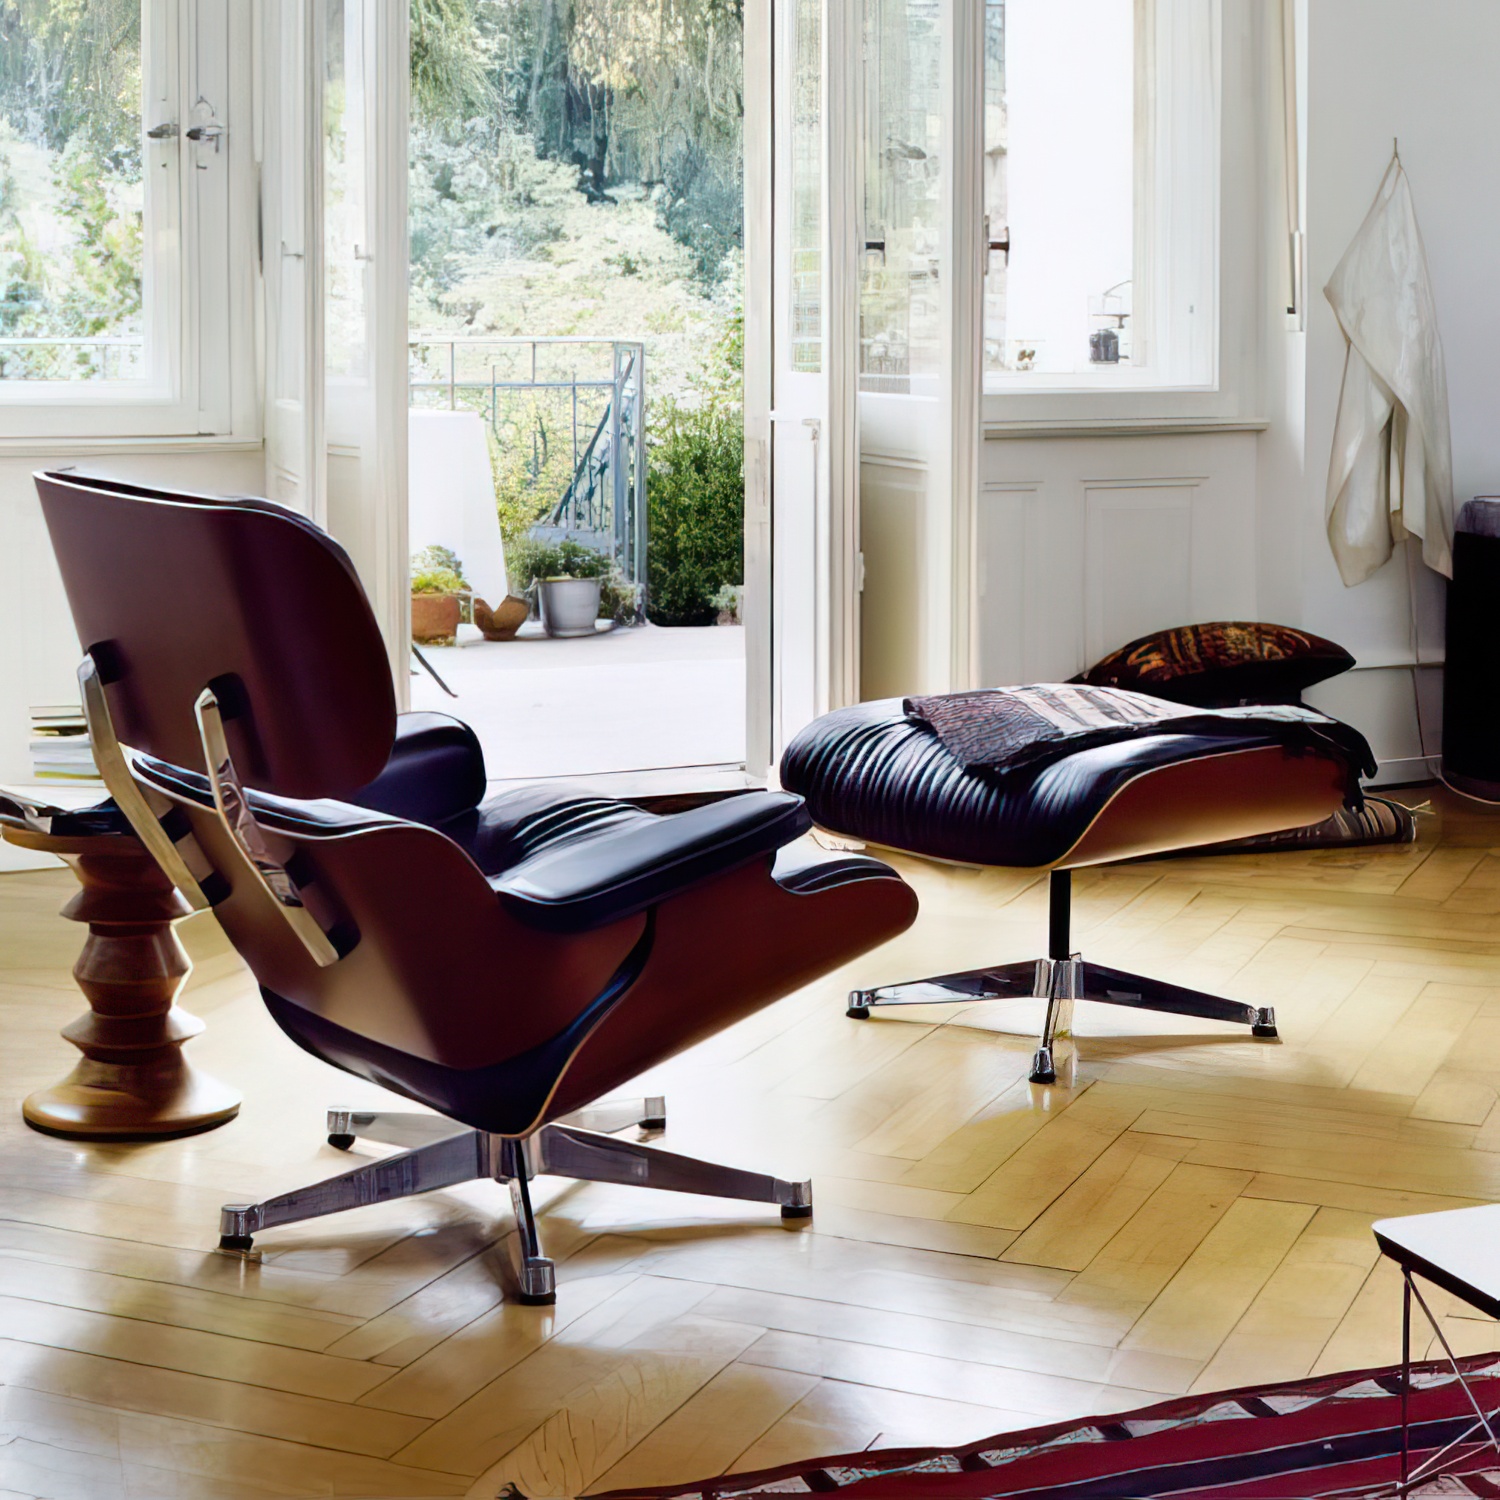 Lounge Chair and Ottoman 41212200 Santos Palisander Leder Premium Farbe Brandy Gestell Aluminium in Schwarz